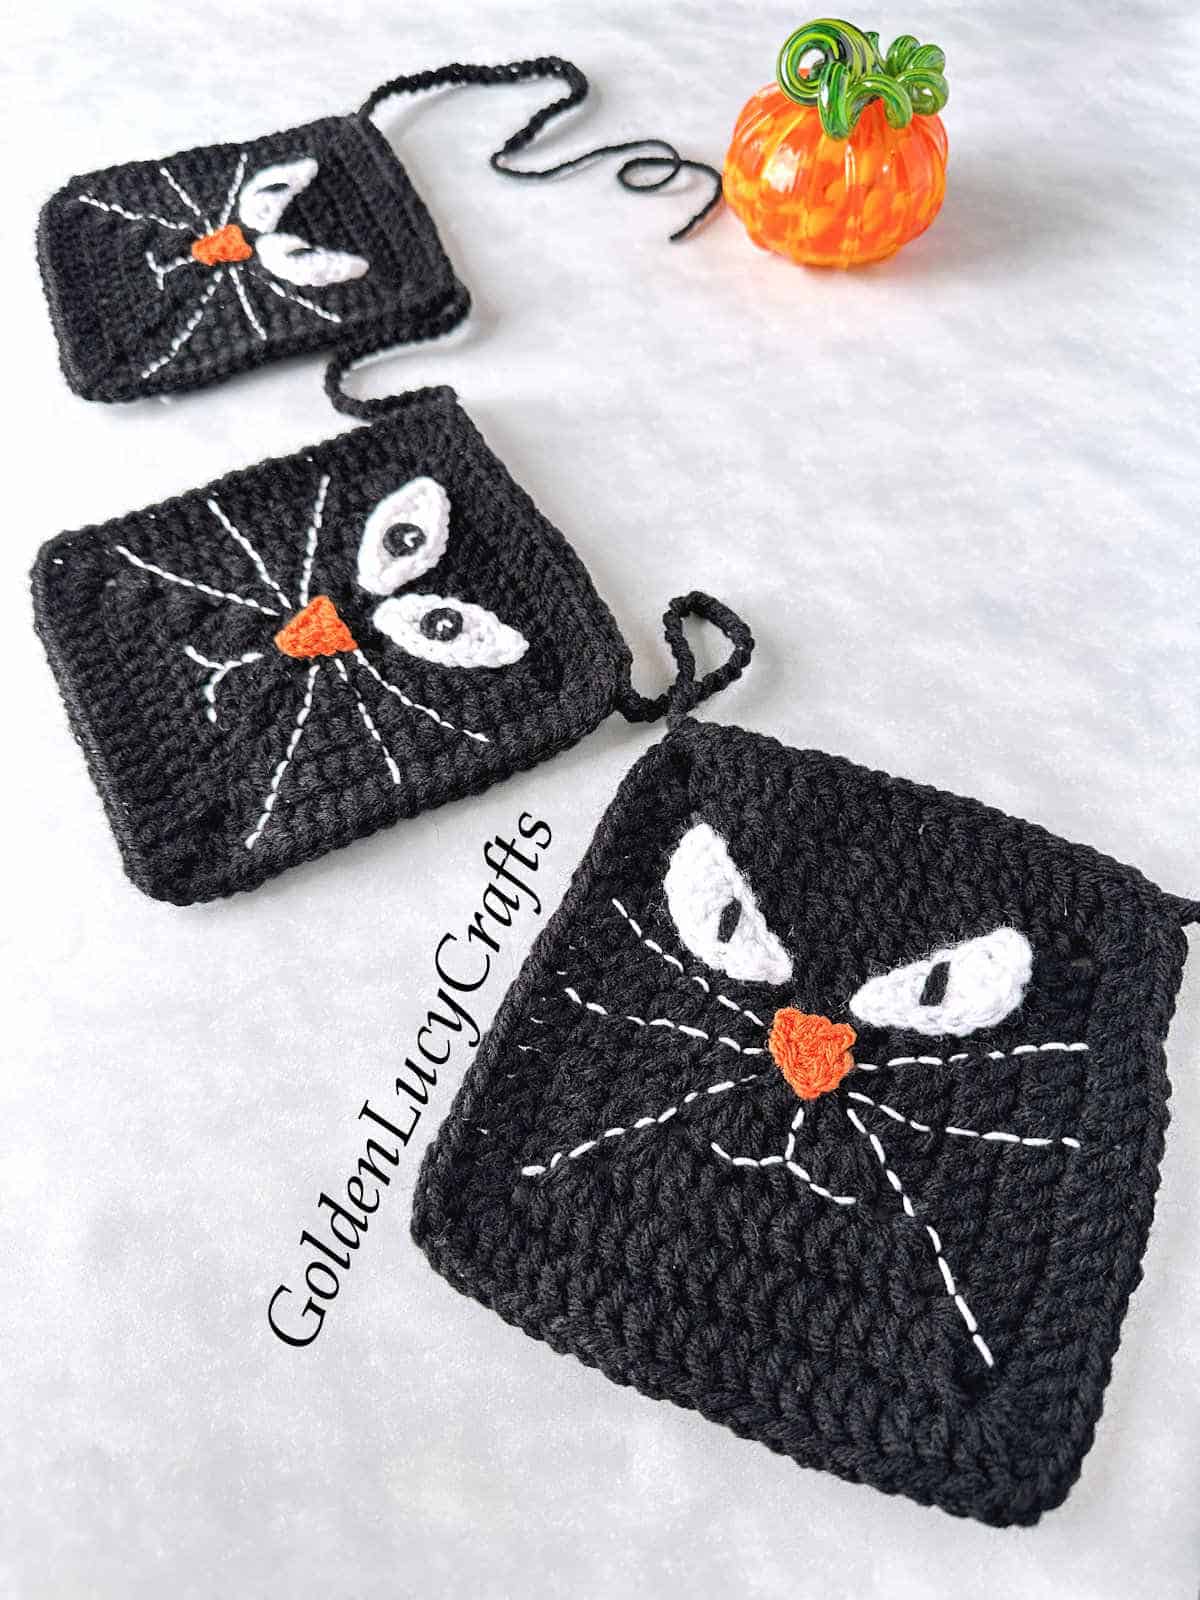 Black cat crochet garland close up picture.